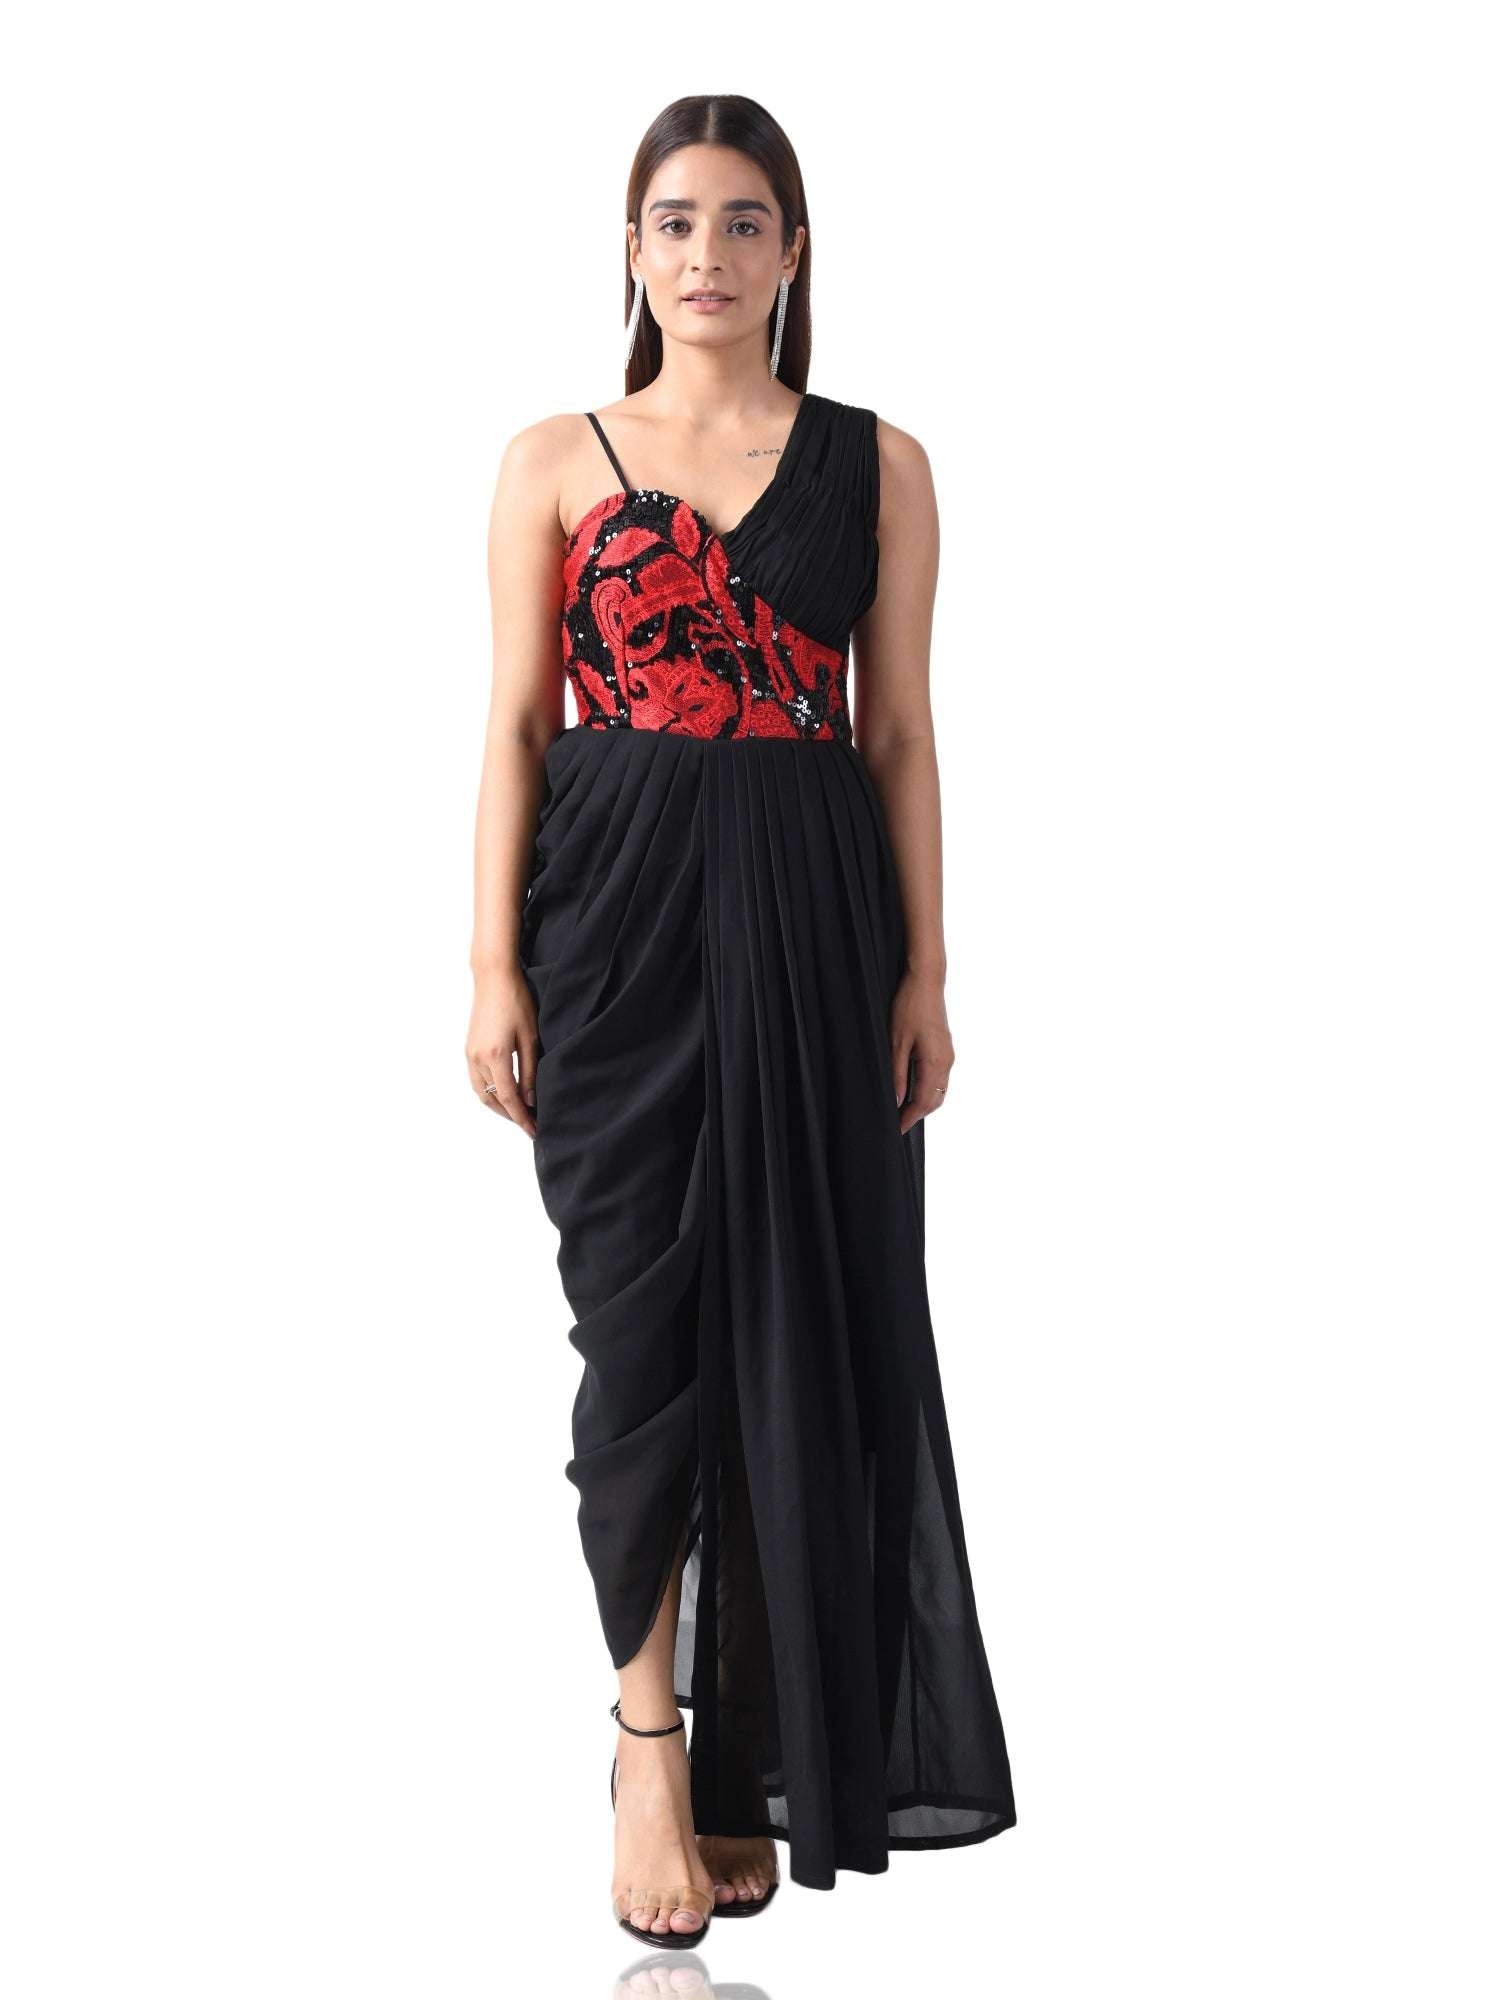 paola embroired corset black draped dress